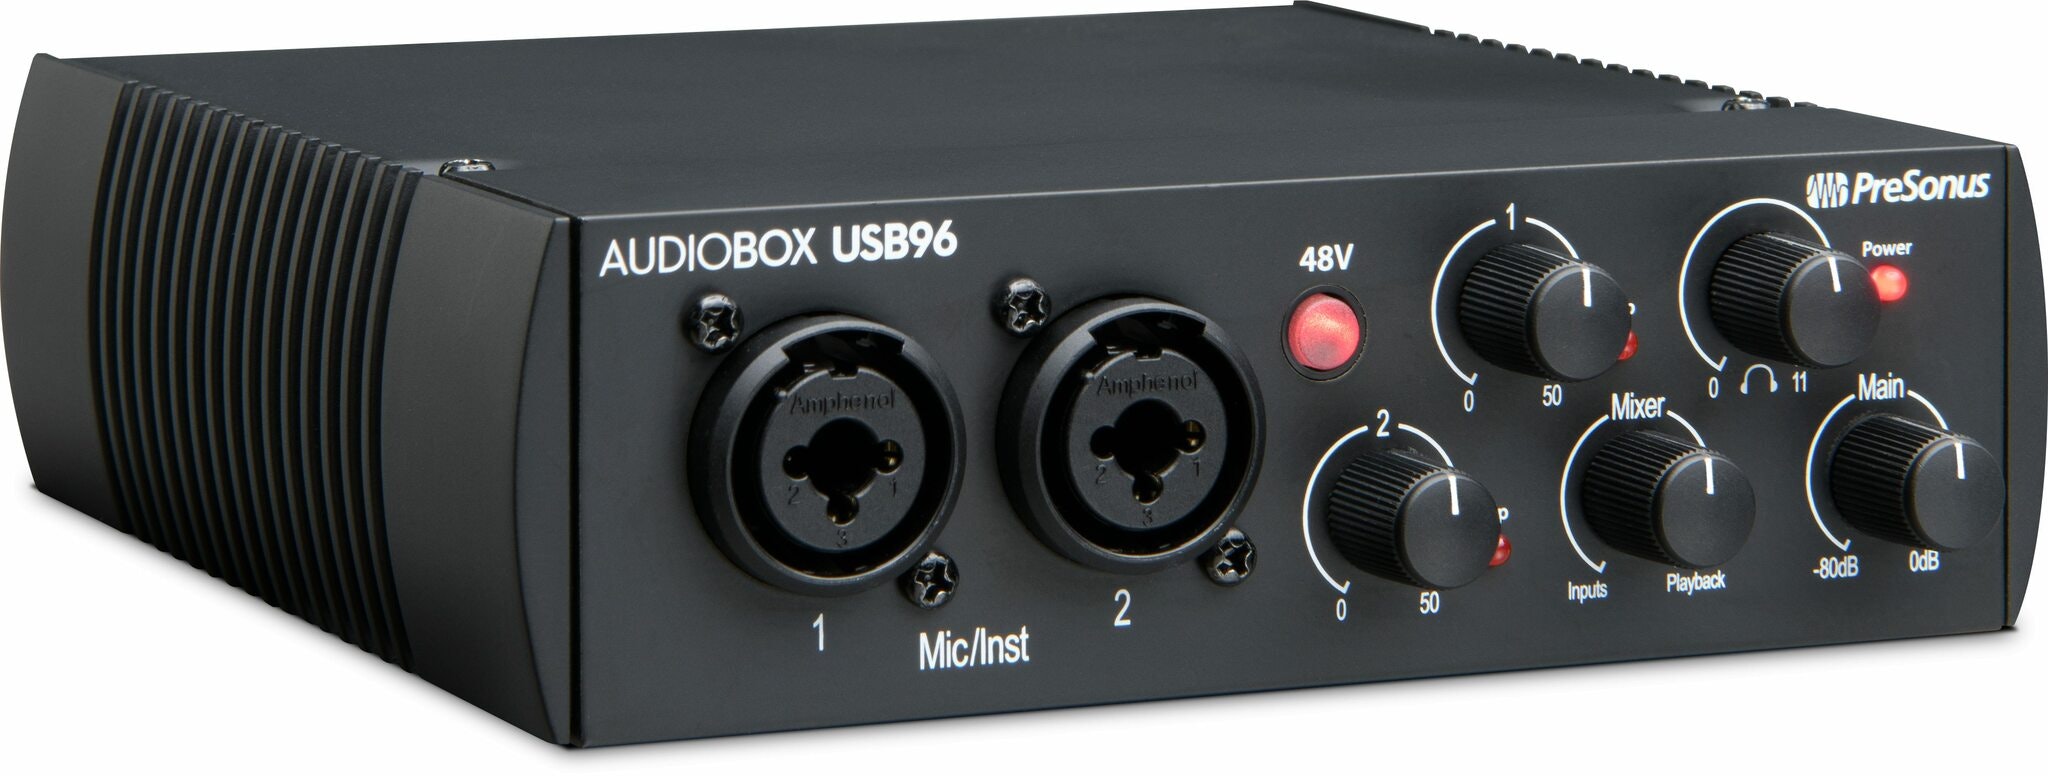 AudioBox USB 96 25 års jubileums modell